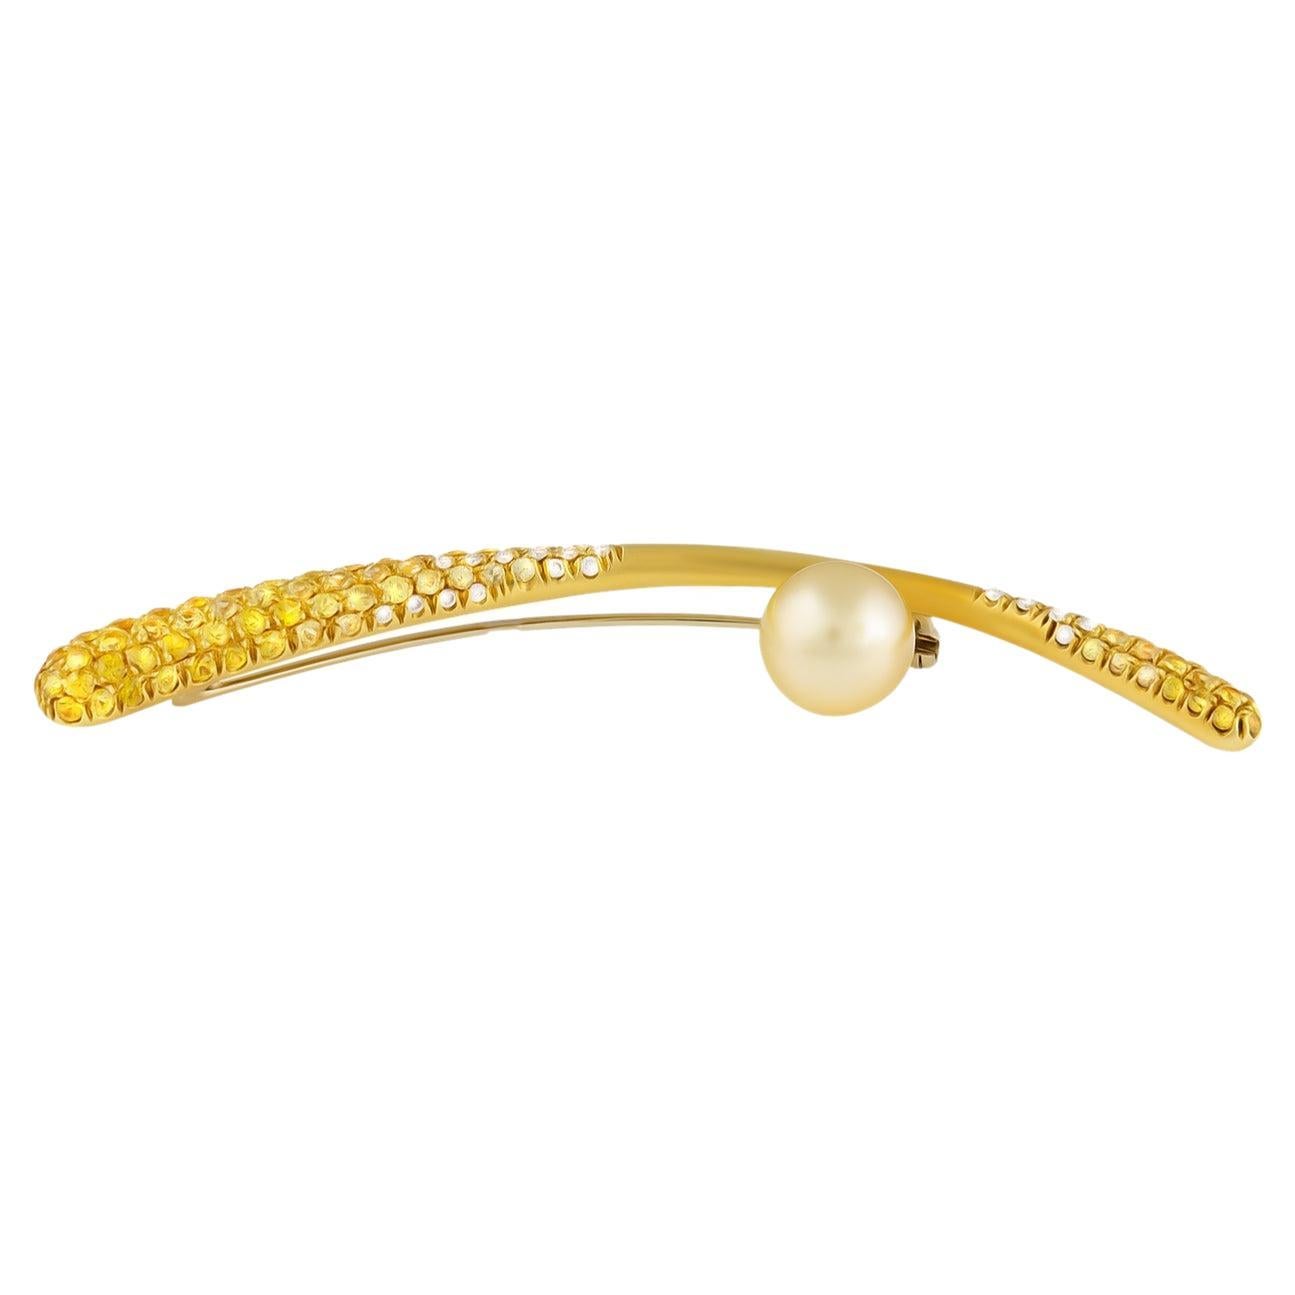 Stefan Hafner Pin
18K Yellow Gold
Diamond: 0.32ctw
Sapphire: 2.82ctw
Italian made
Retail price: $12,400.00
SKU: BLU01433